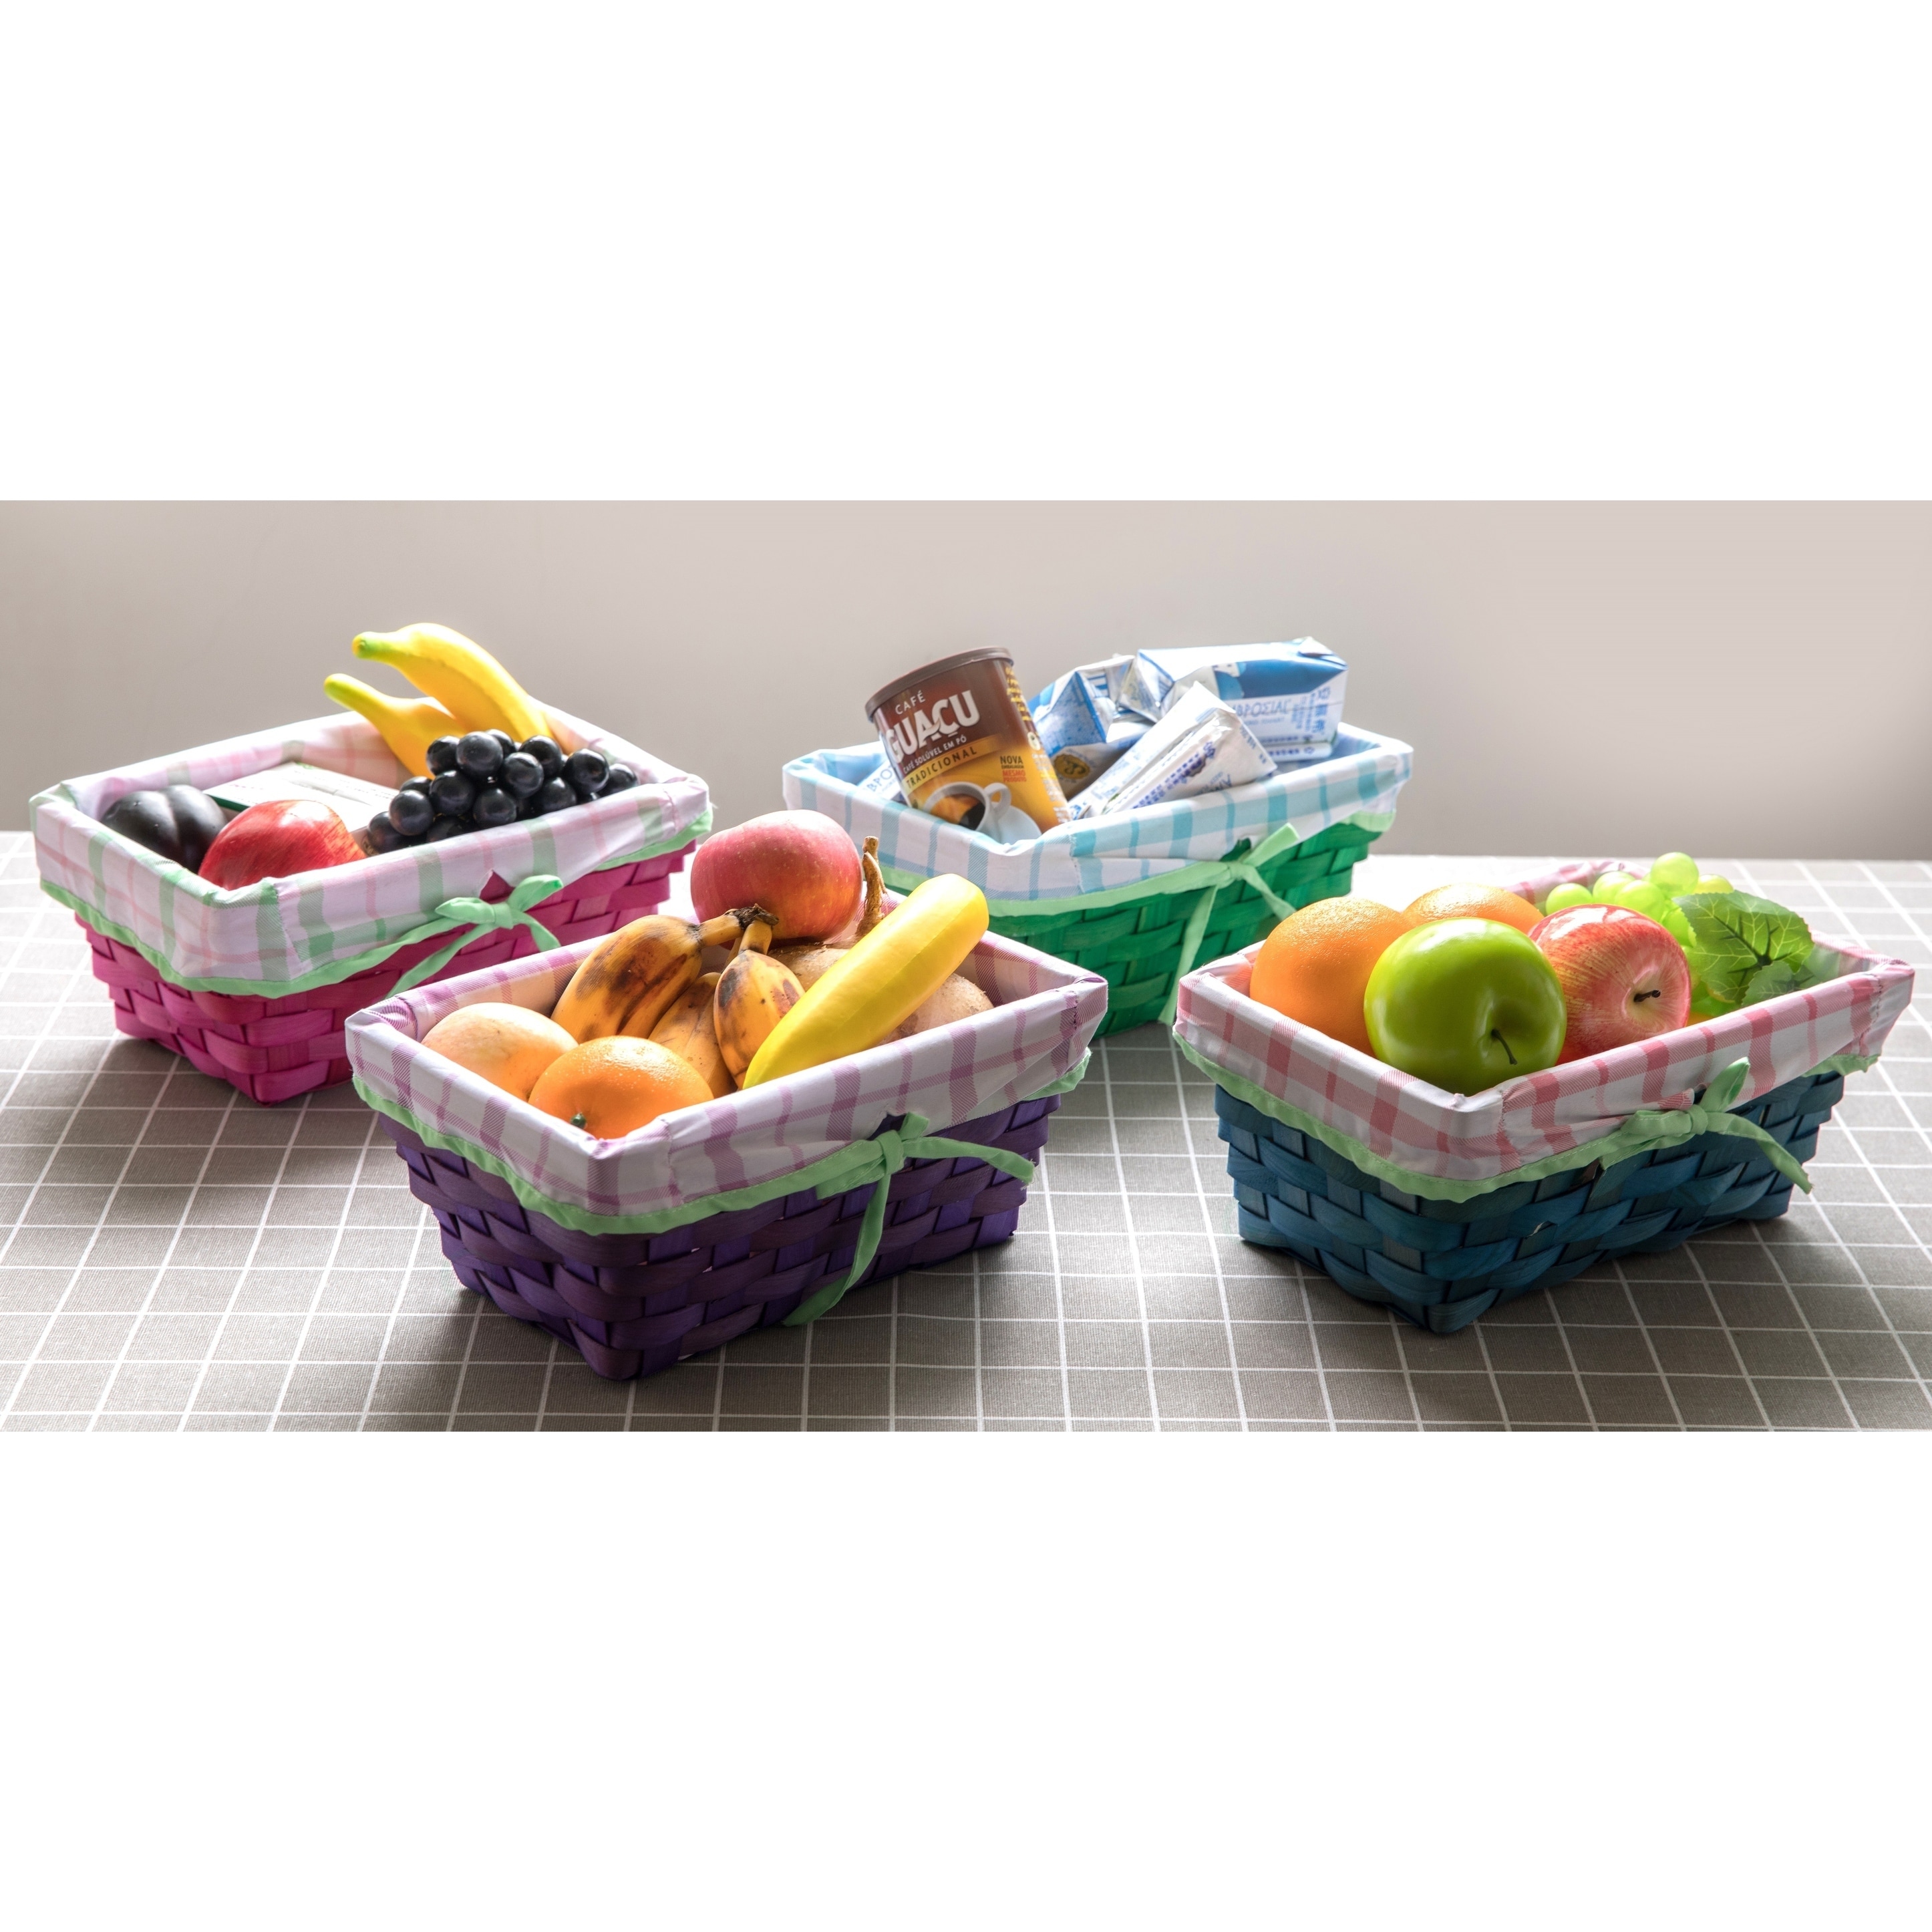 patterned storage baskets